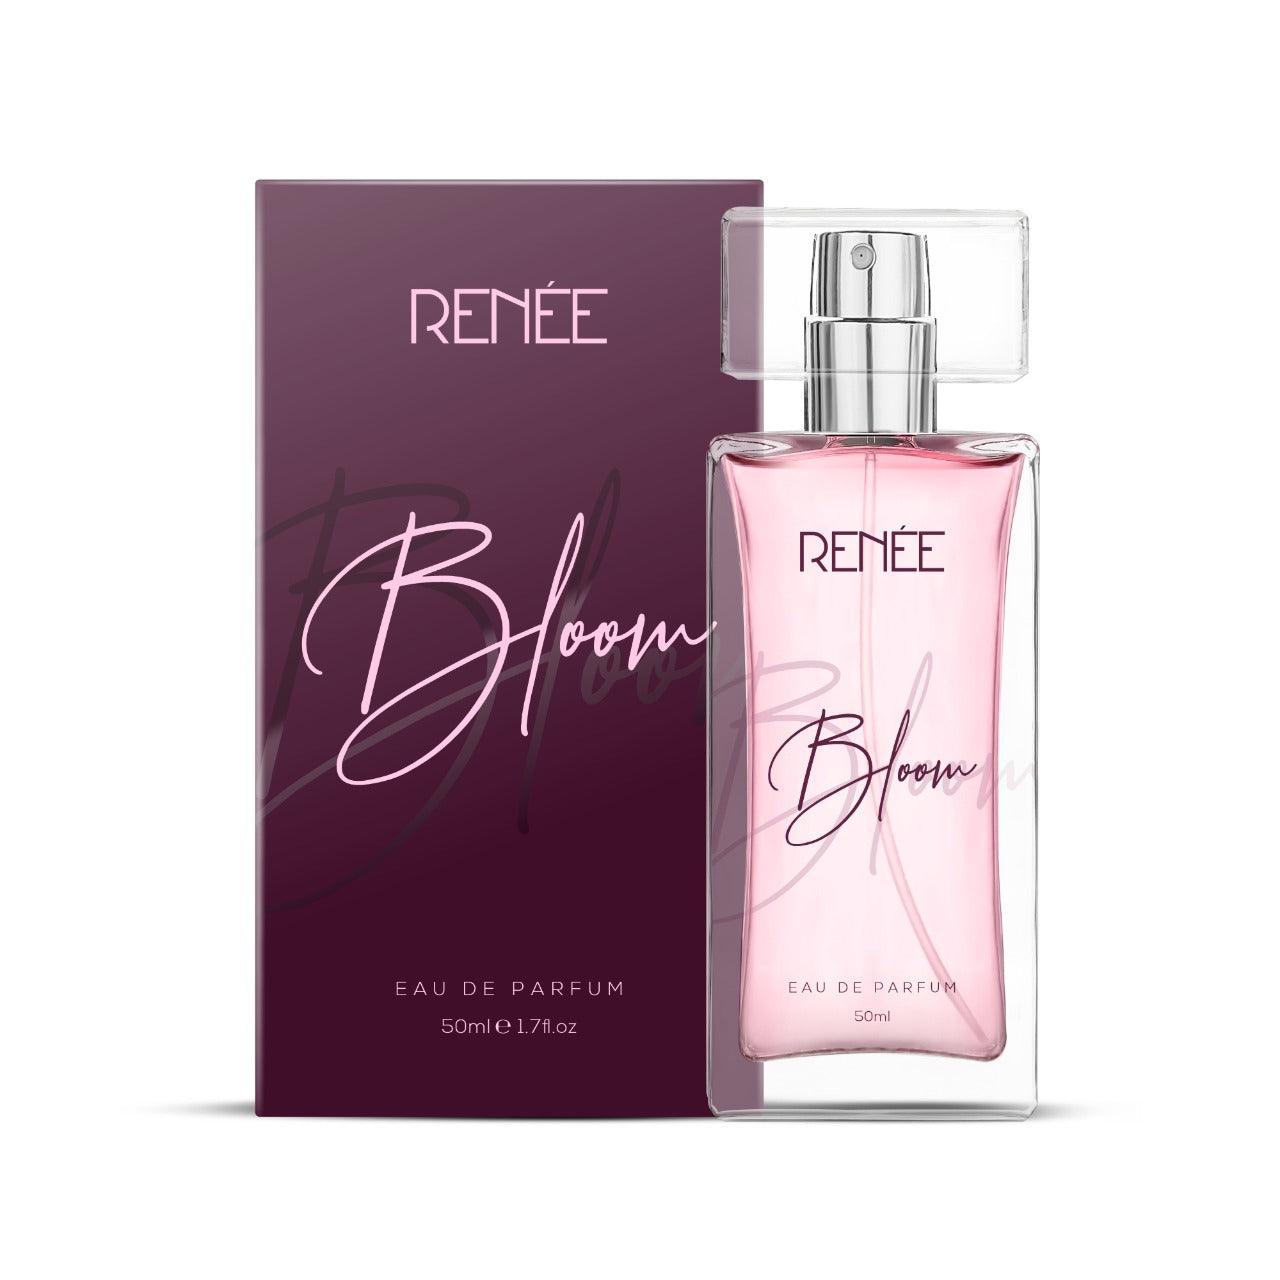 RENEE Dark Desire Eau De Parfum Long Lasting Perfume Scent For Women 50ml